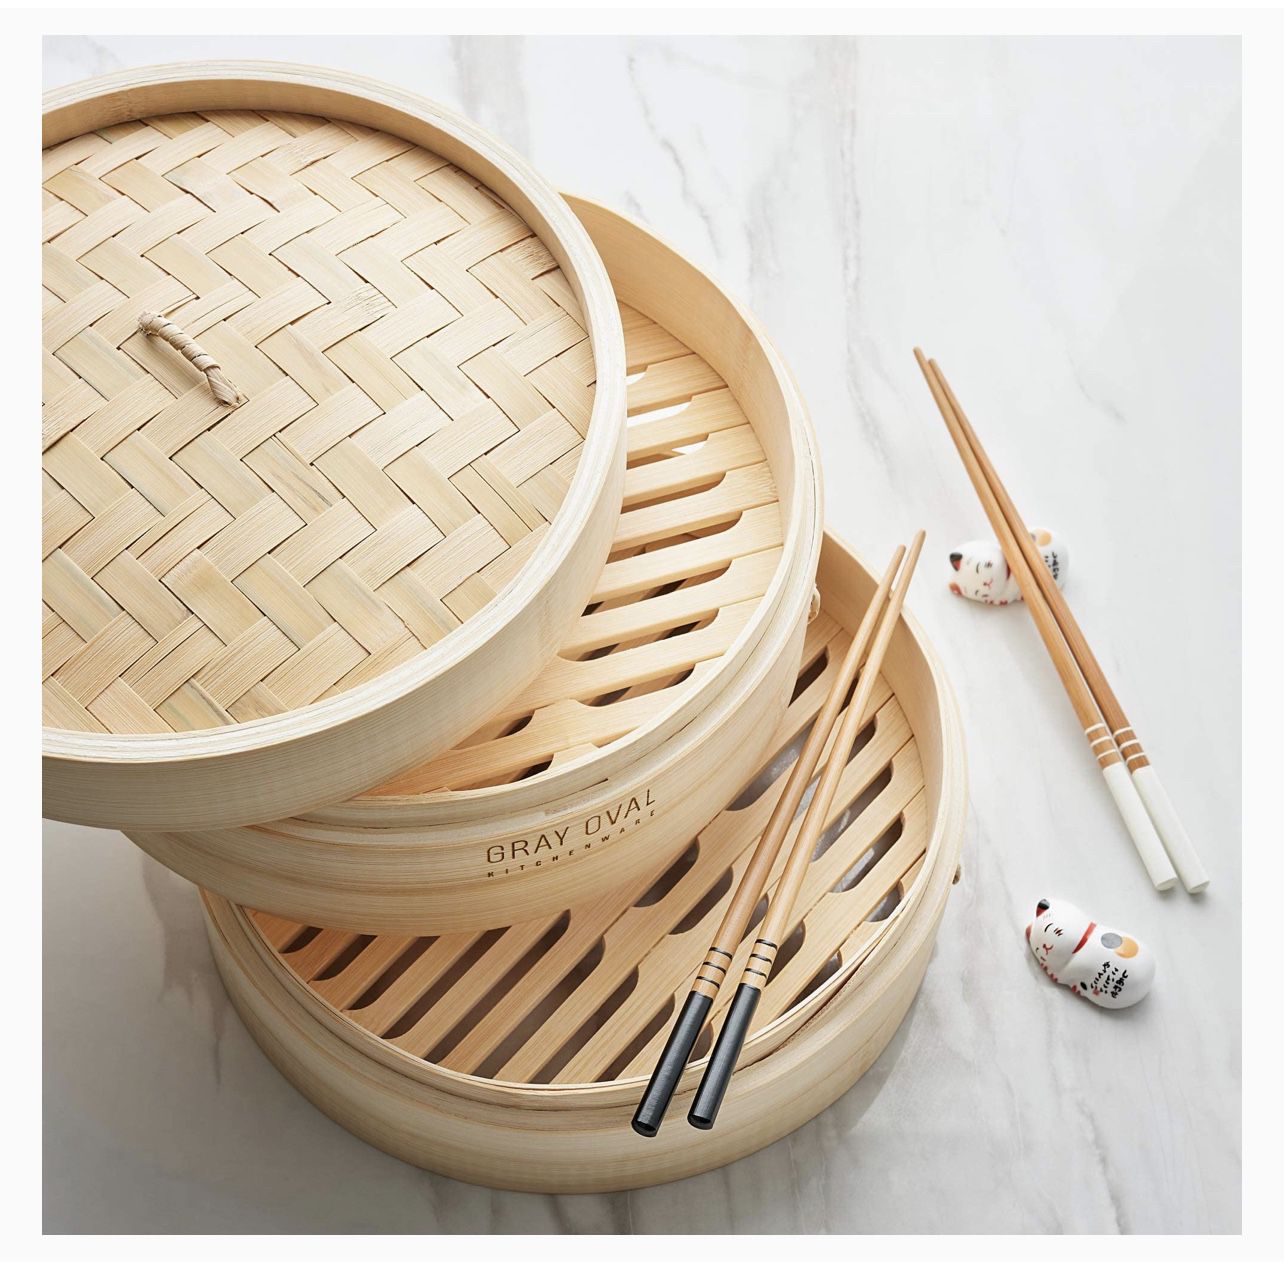 Bamboo Steamer Basket